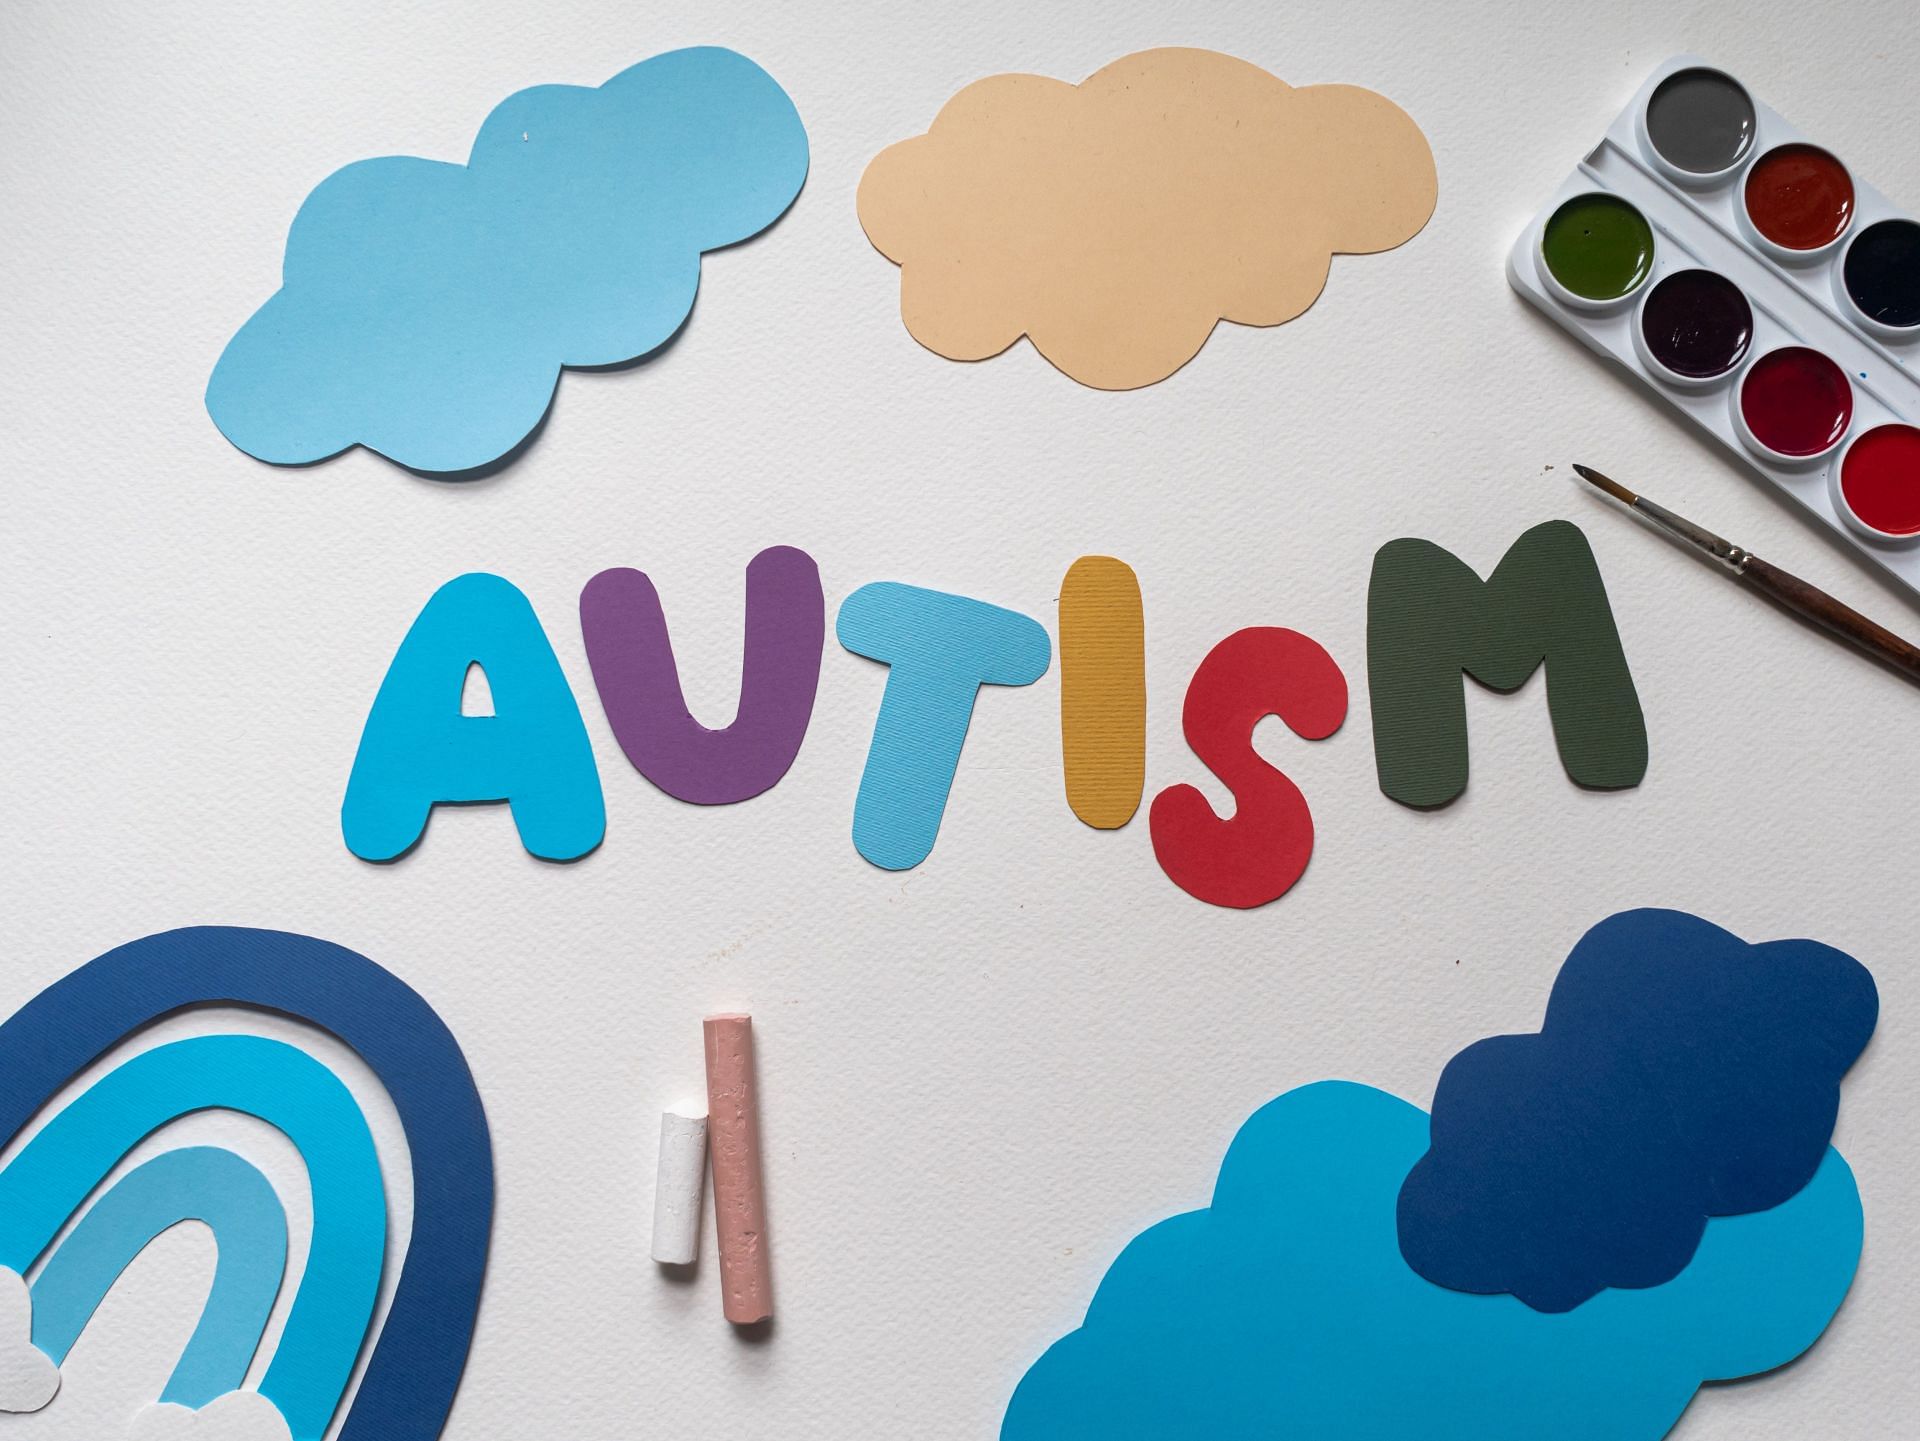 Autism lies on a spectrum of neurodevelopmental conditions. (Image via Pexels/Polina Kovaleva)